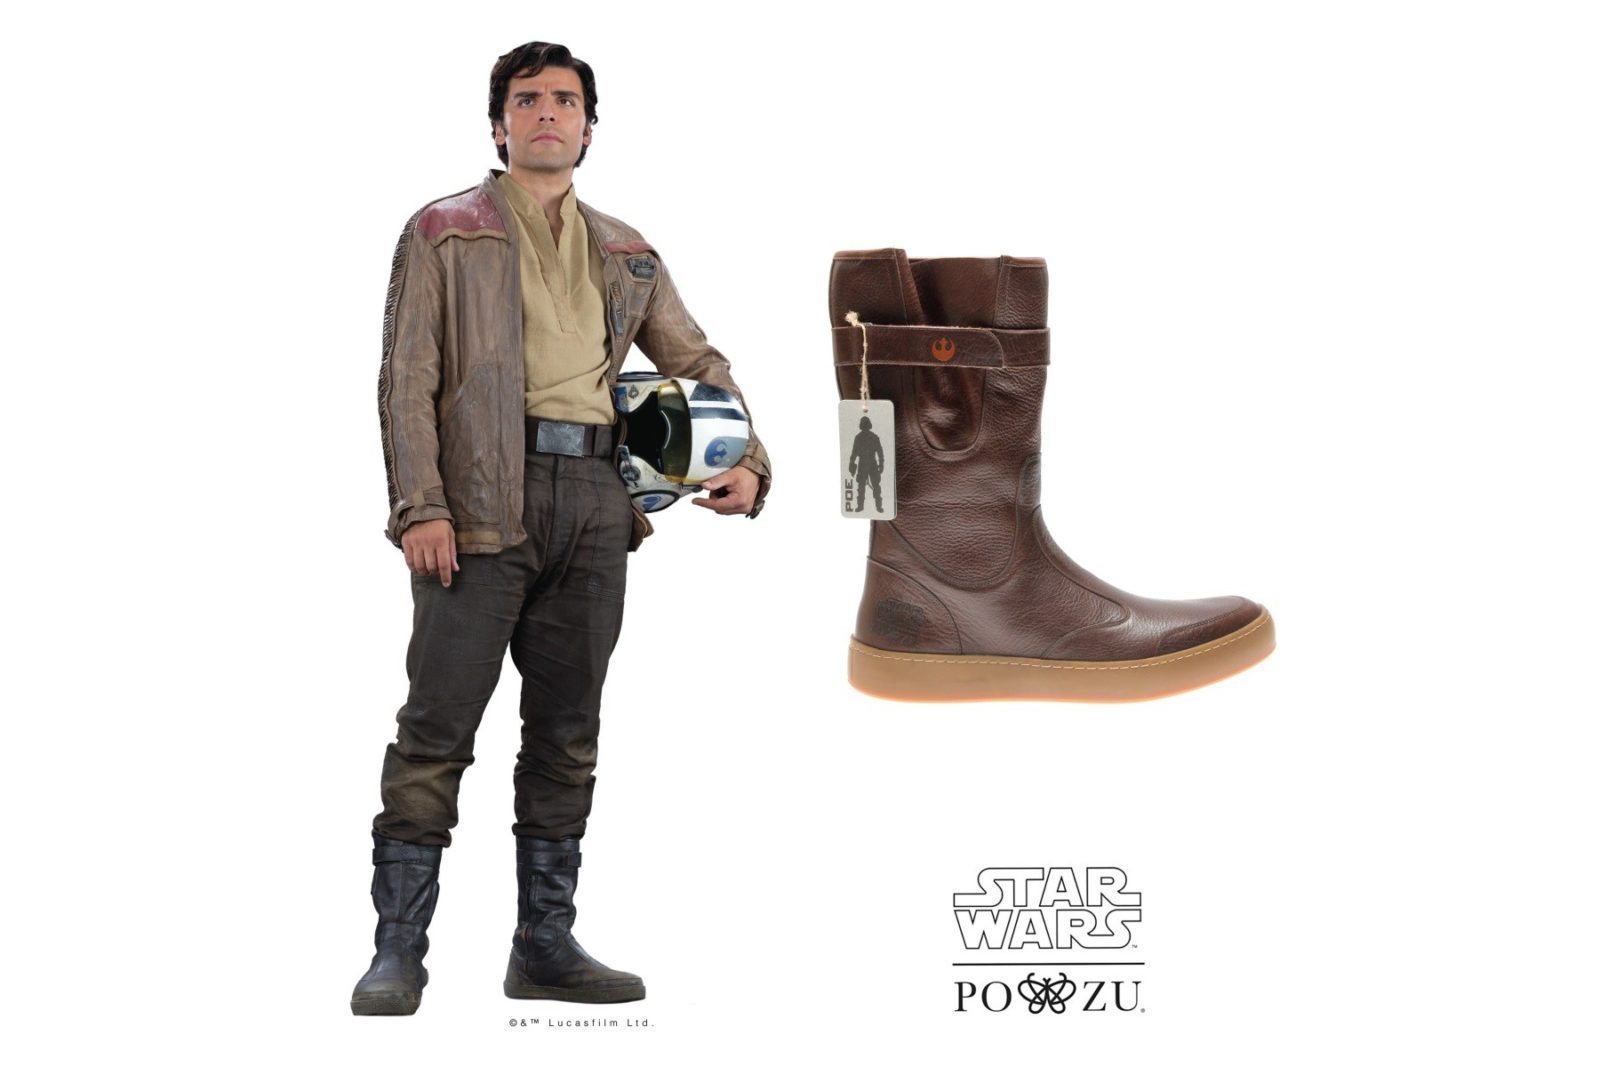 Po-Zu x Star Wars Poe Dameron boot preview!